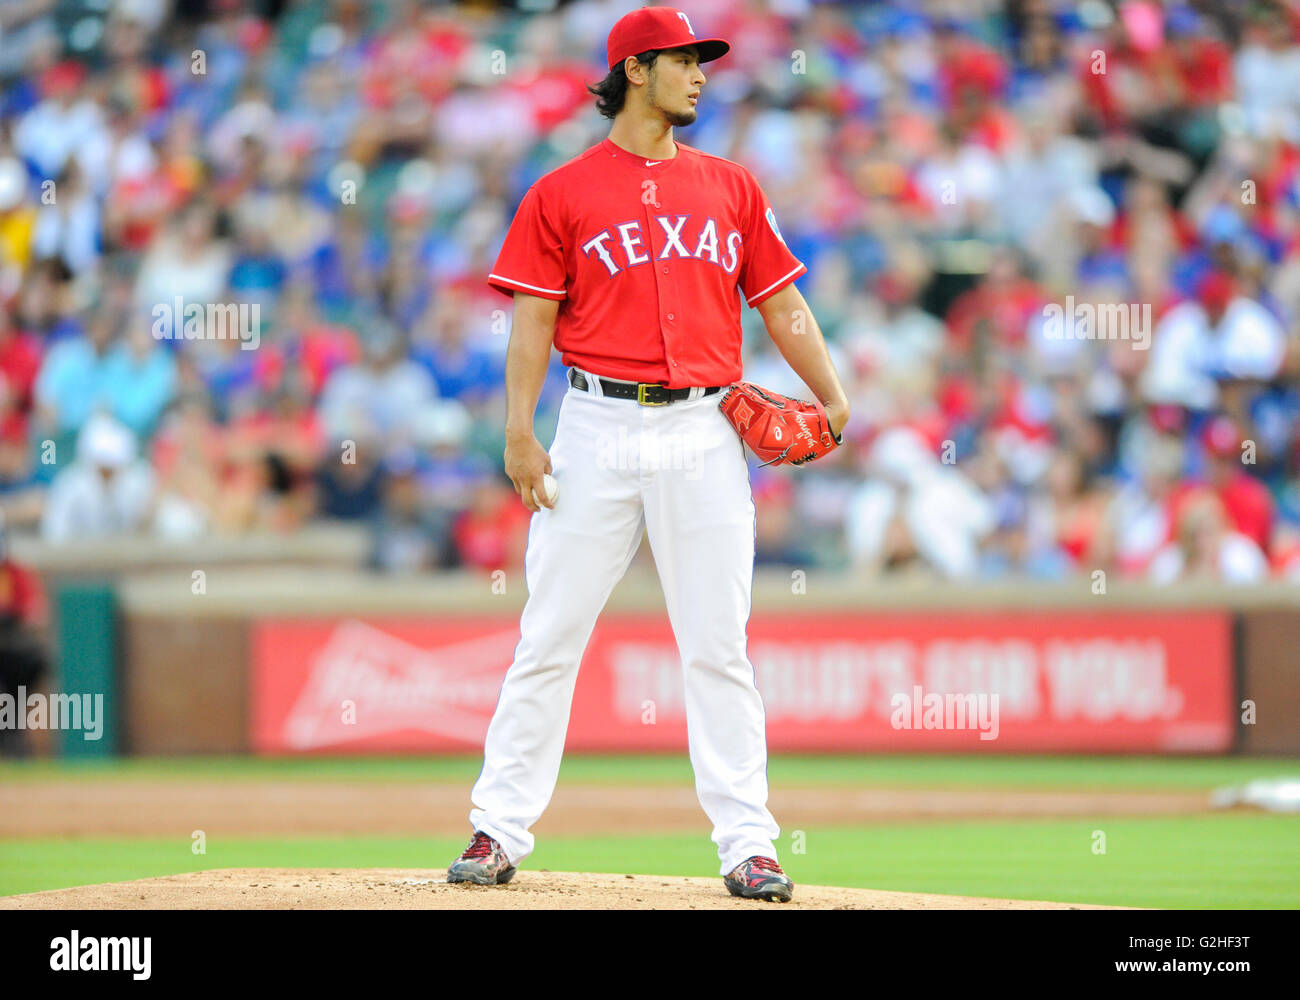 Texas Rangers Yu Darvish #11 MLB BASEBALL Little Boys Size Large (7) Jersey!